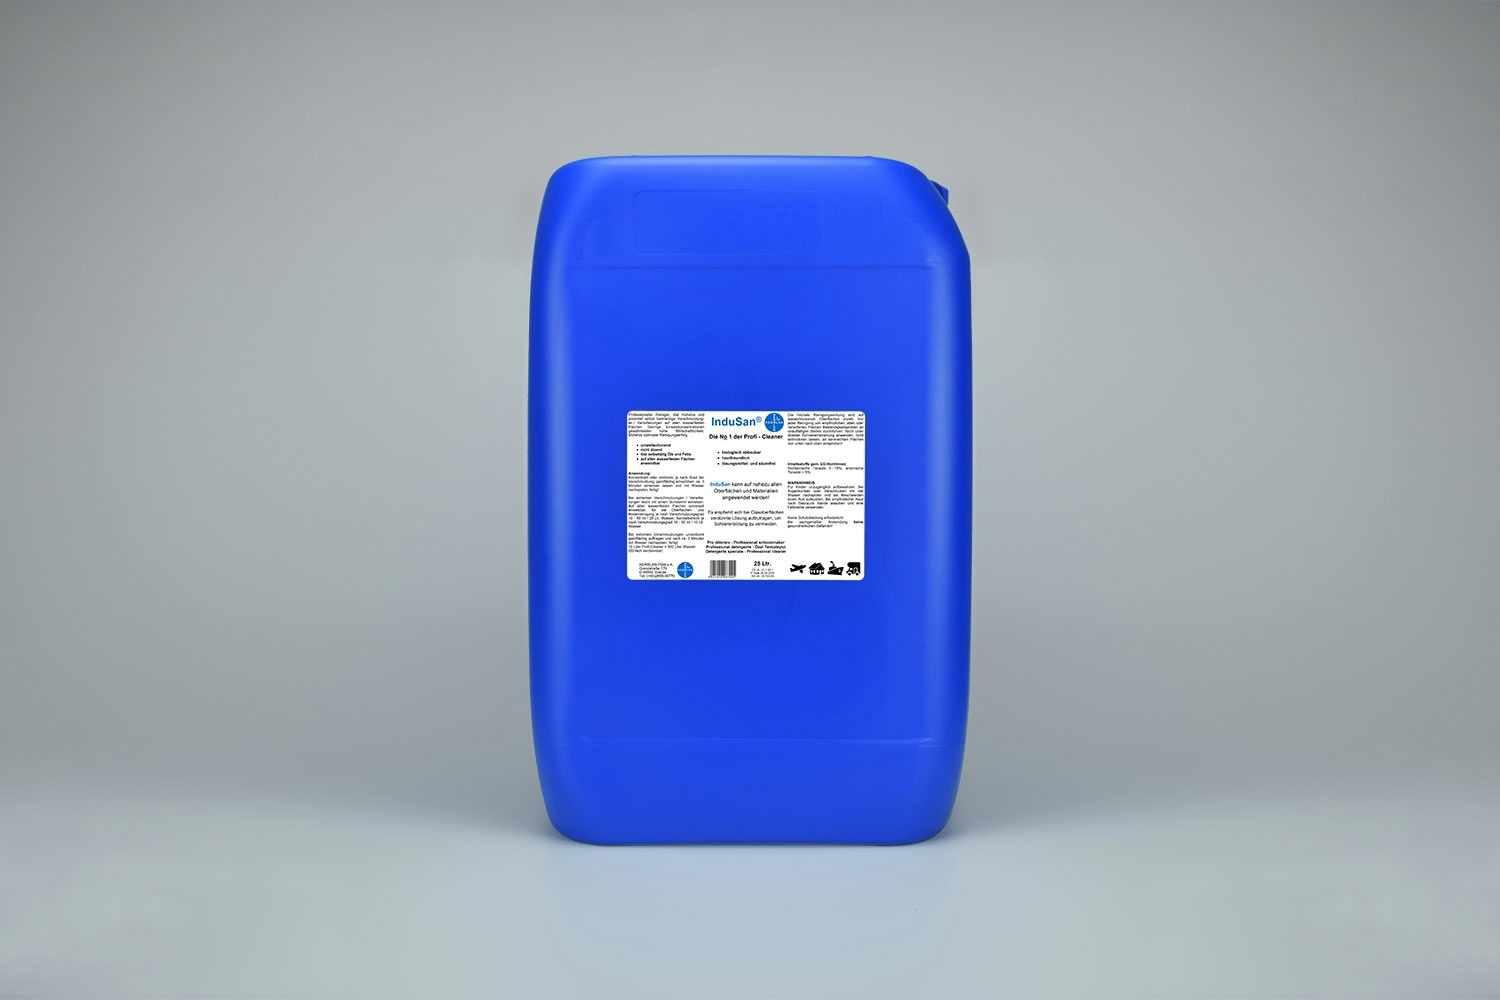 InduSan - Reinigungskonzentrat I 20 Liter Kanister I Neutral I Made in Germany